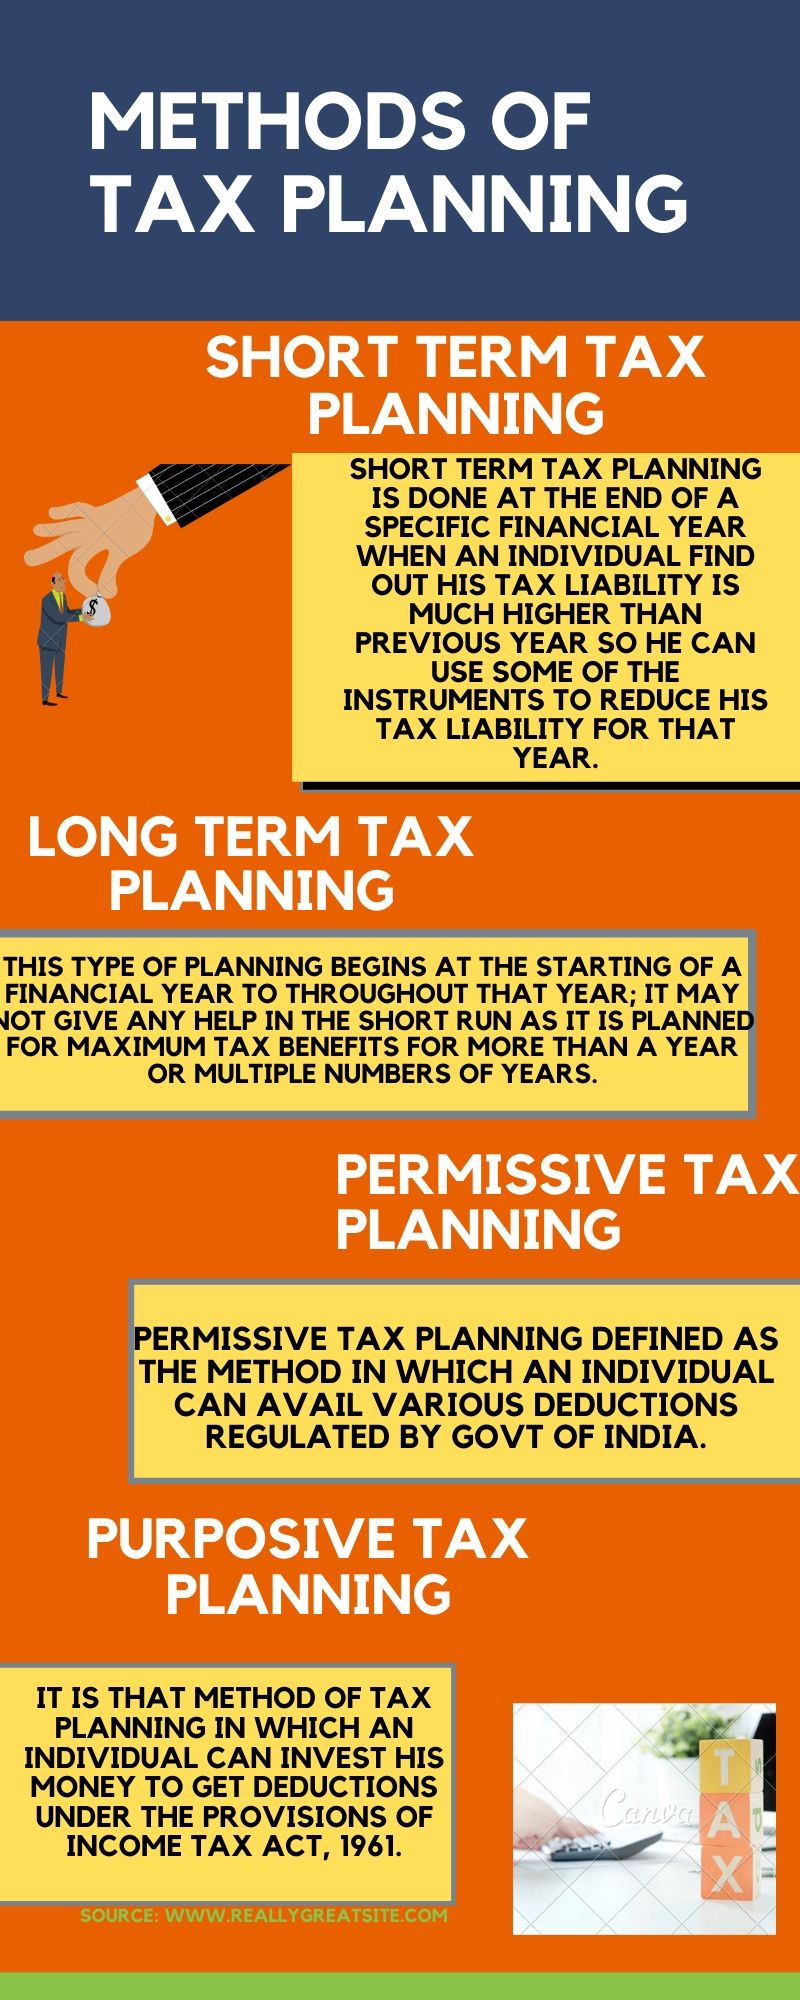 Methods of tax planning